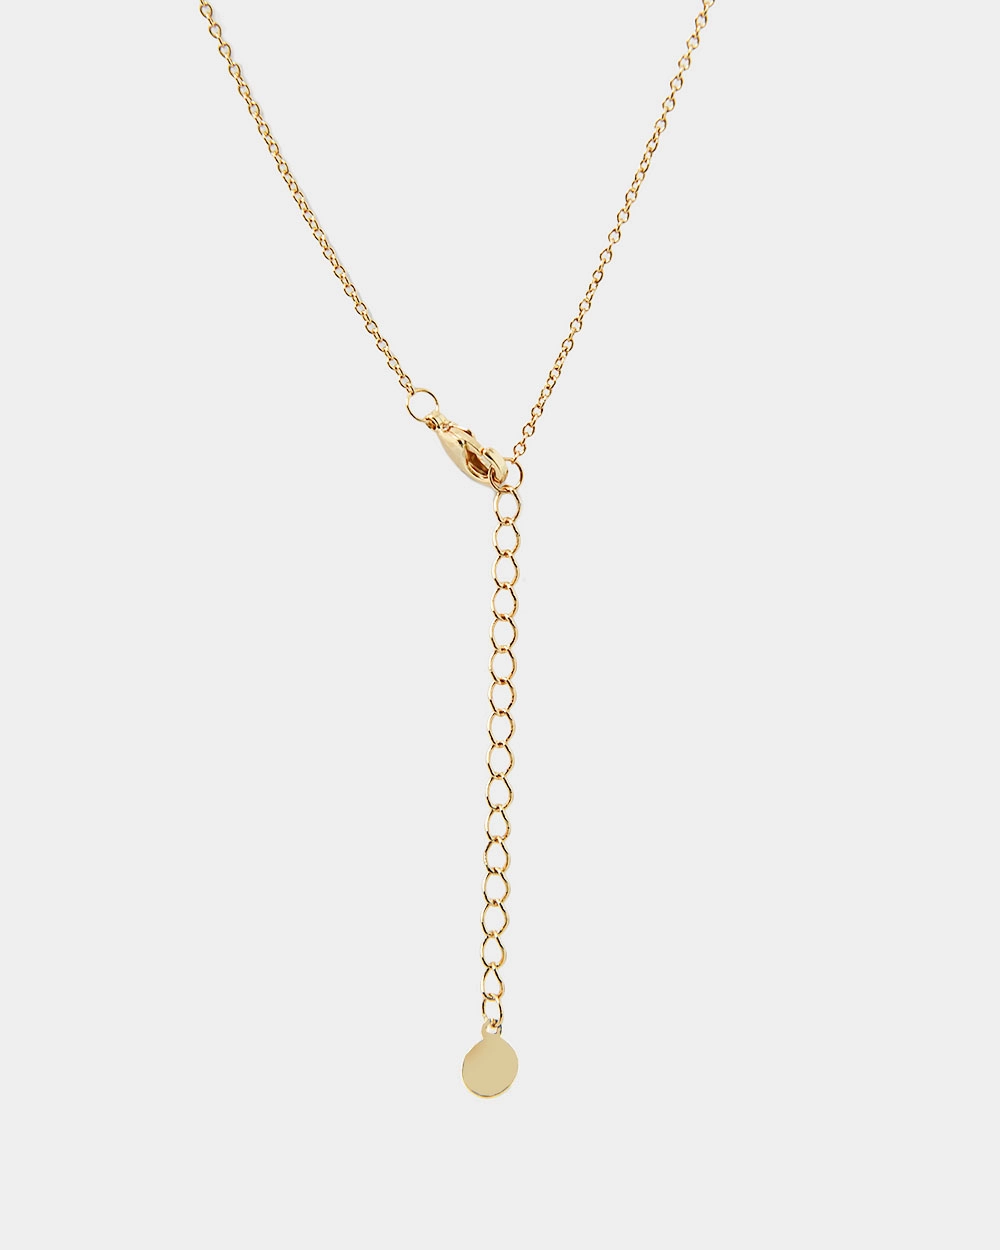 Victoria 16k Gold Necklace